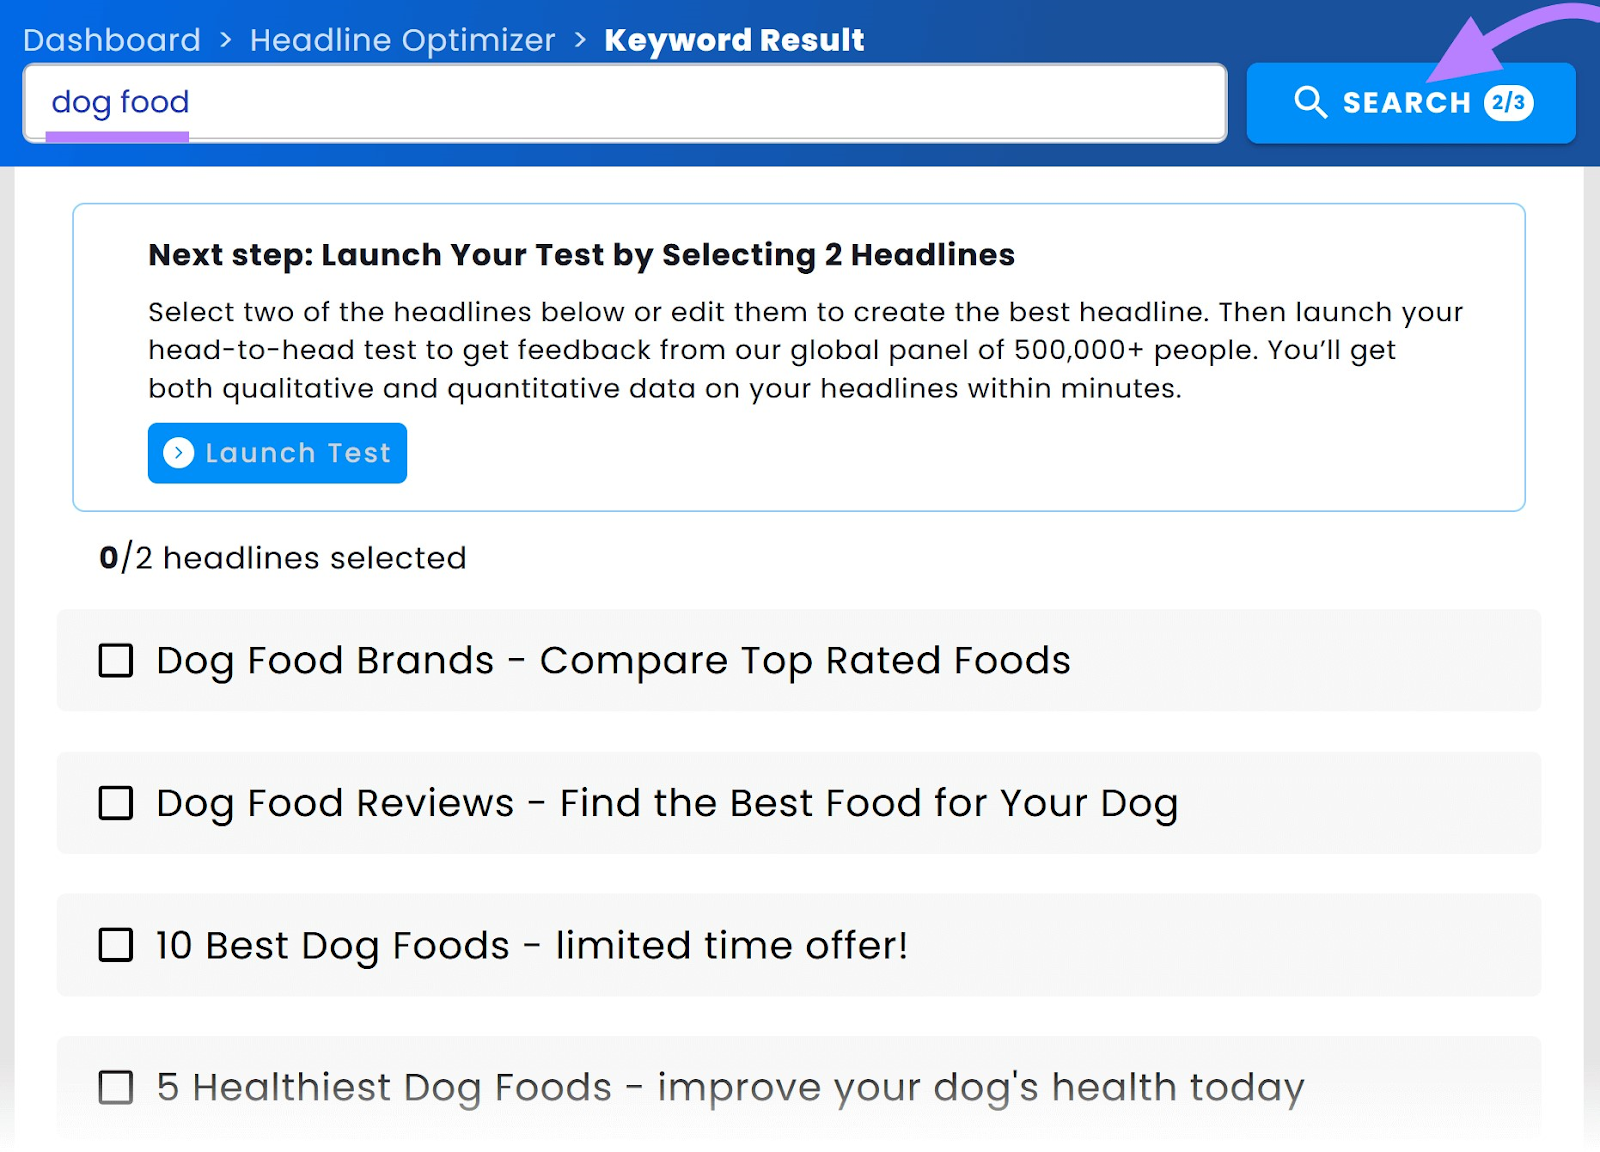 example of Headline Optimizer tool generating several headline ideas for "dog food"